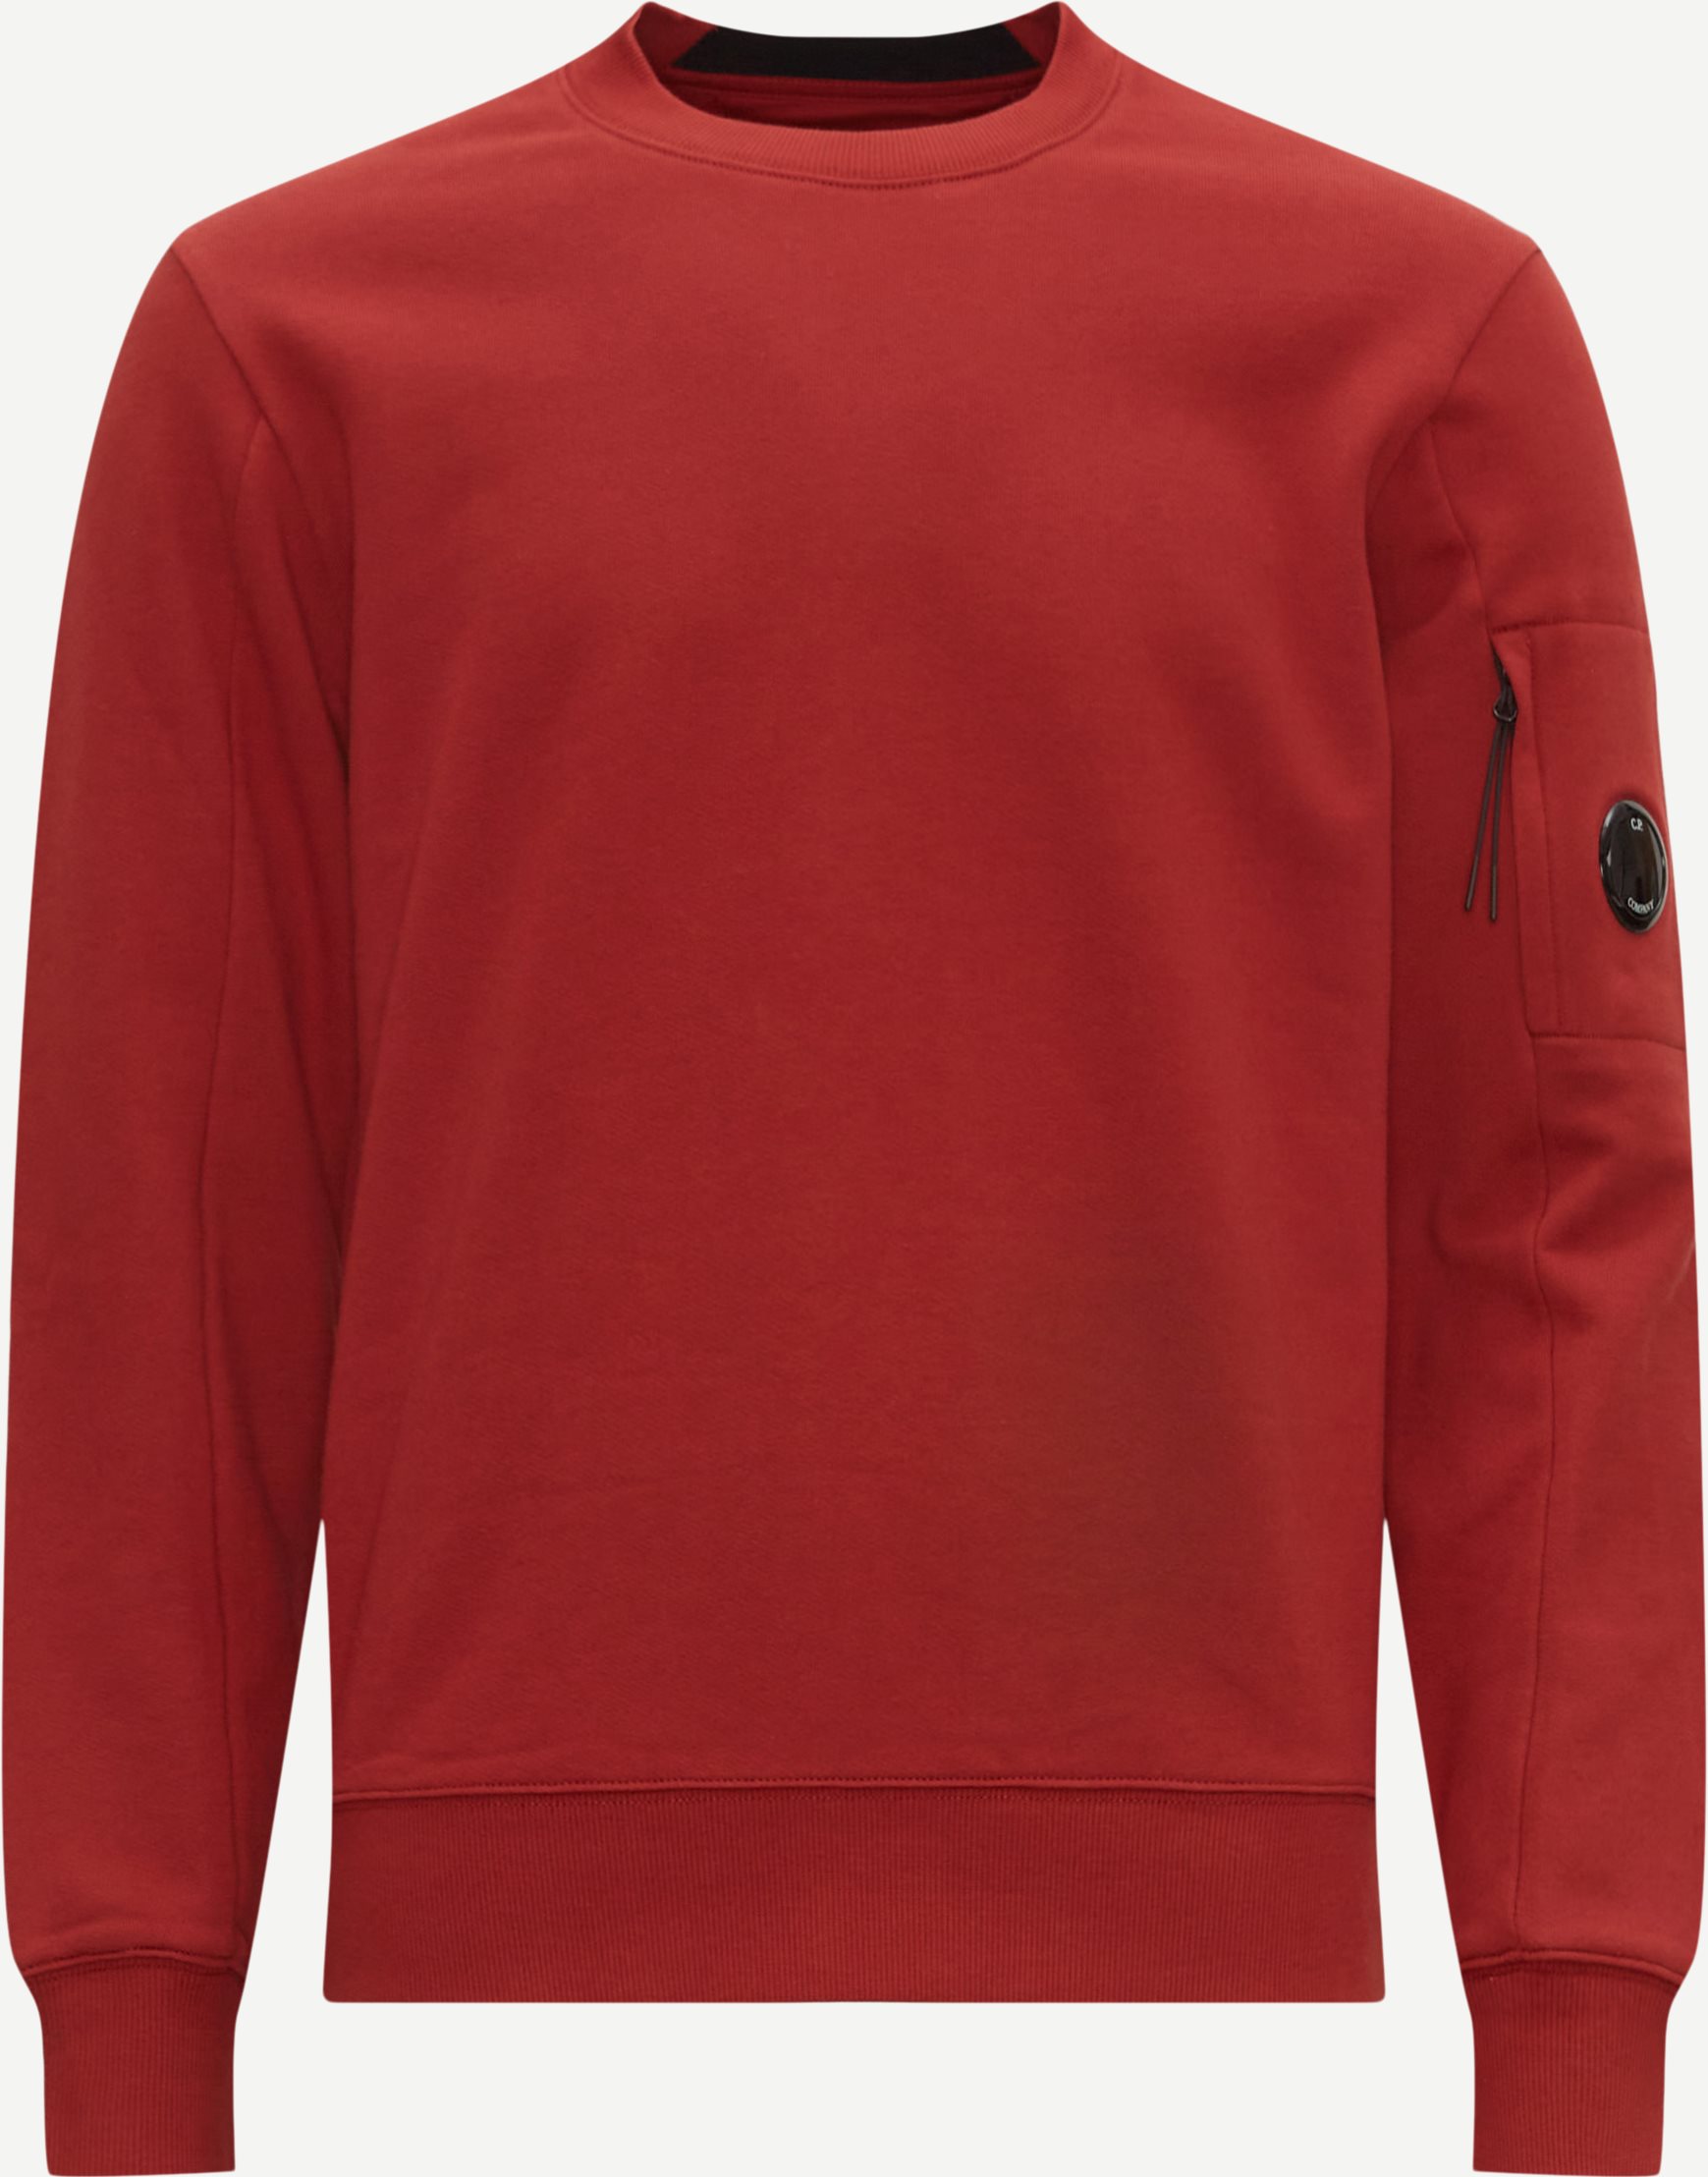 C.P. Company Sweatshirts SS022A 005086W. Bordeaux